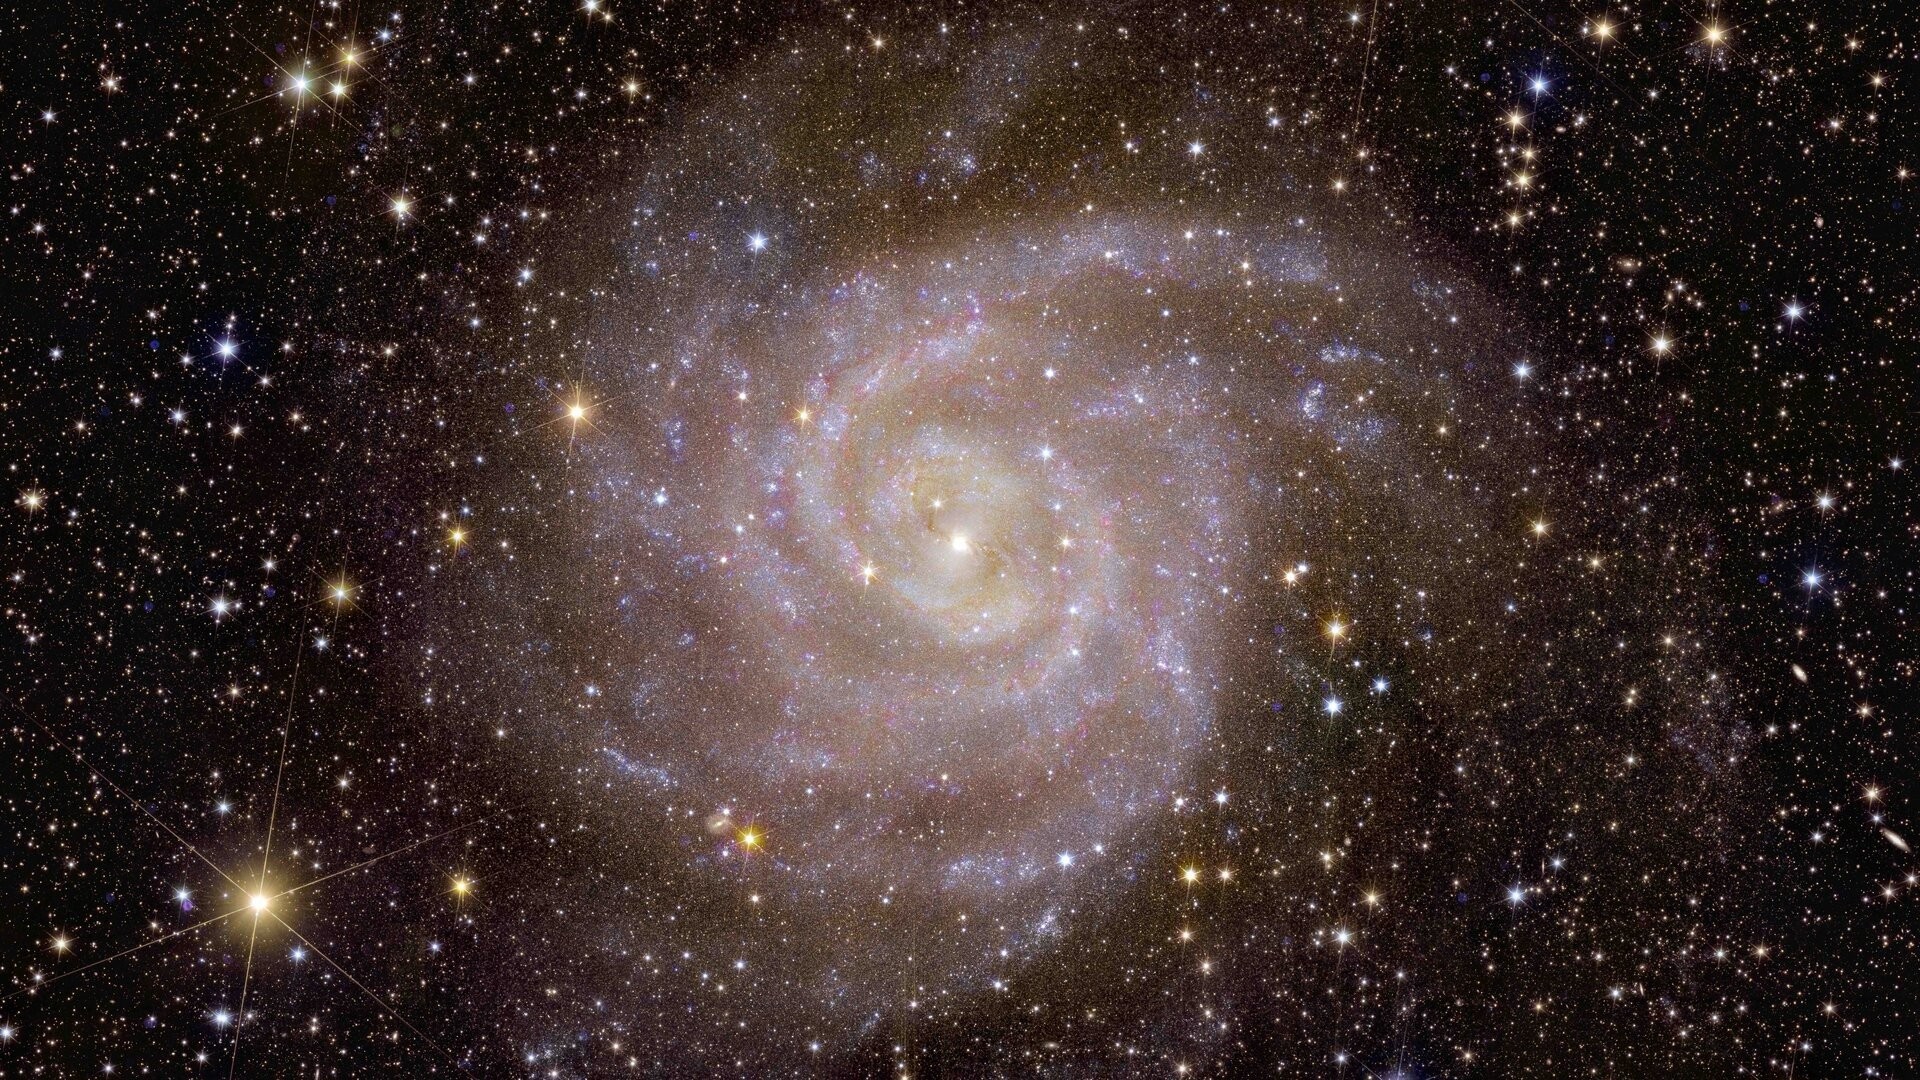 euclid-s-view-of-spiral-galaxy-ic-342-pillars.jpg